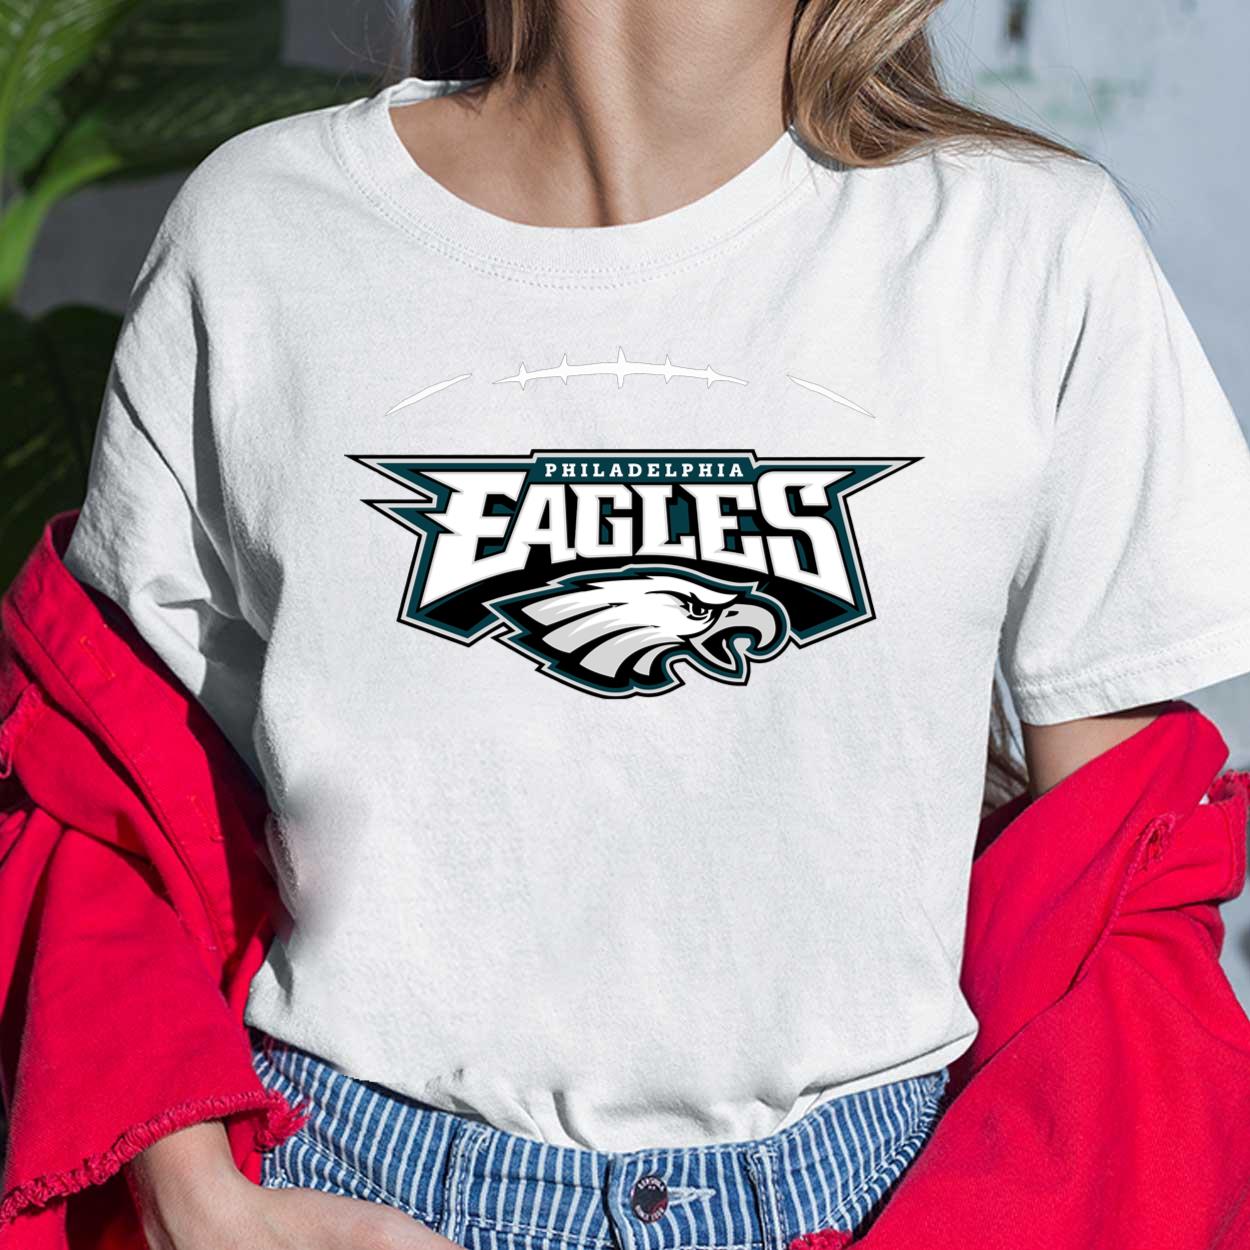 philadelphia eagles youth hoodies